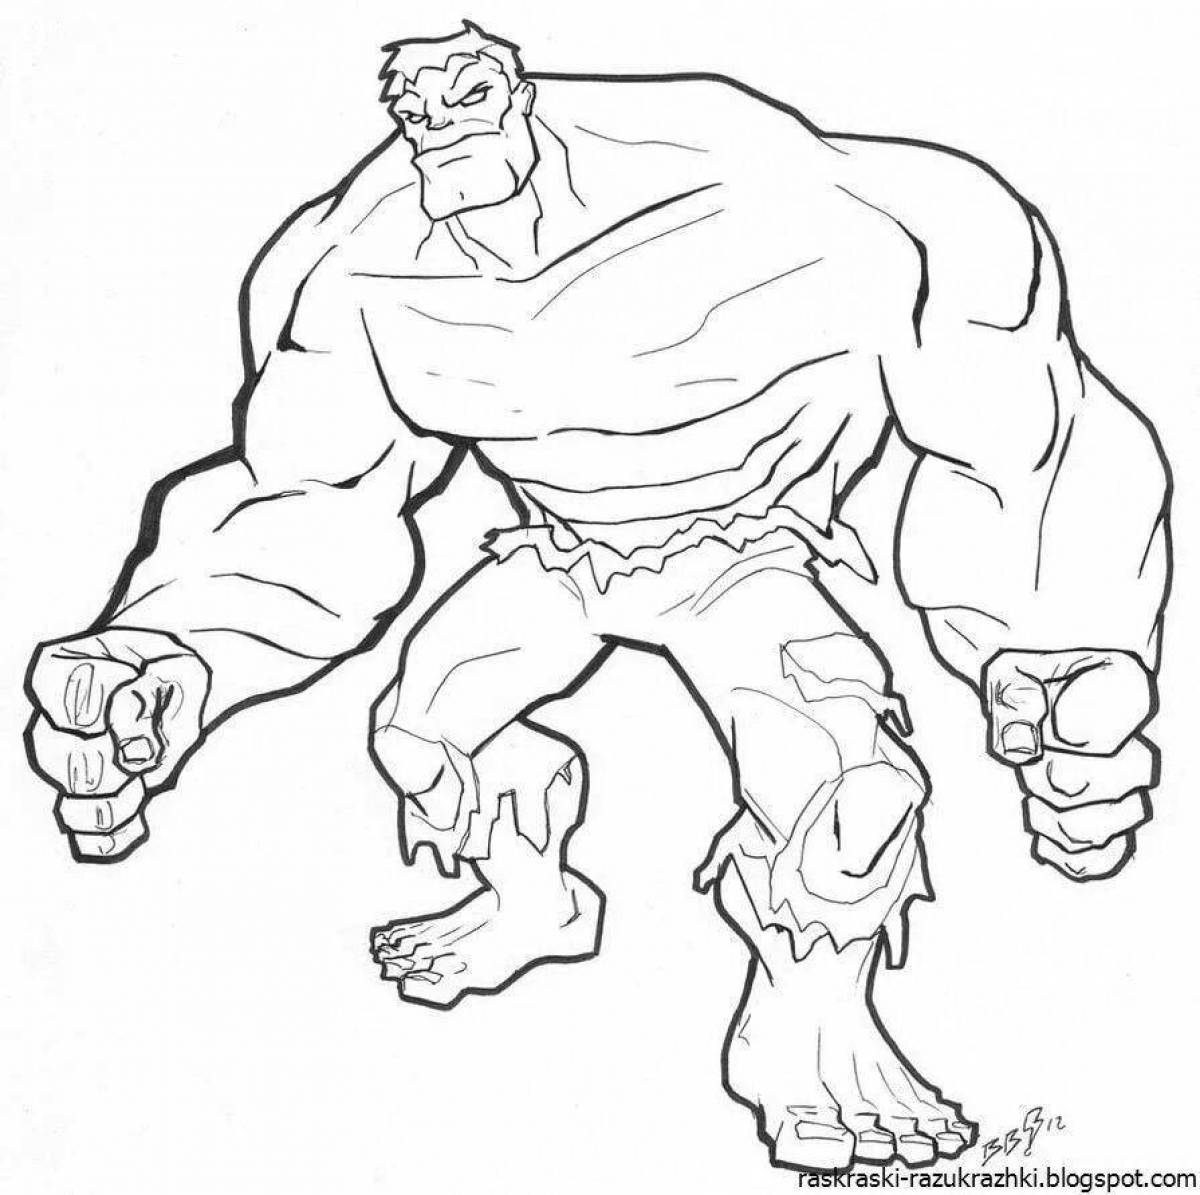 Great hulk coloring page